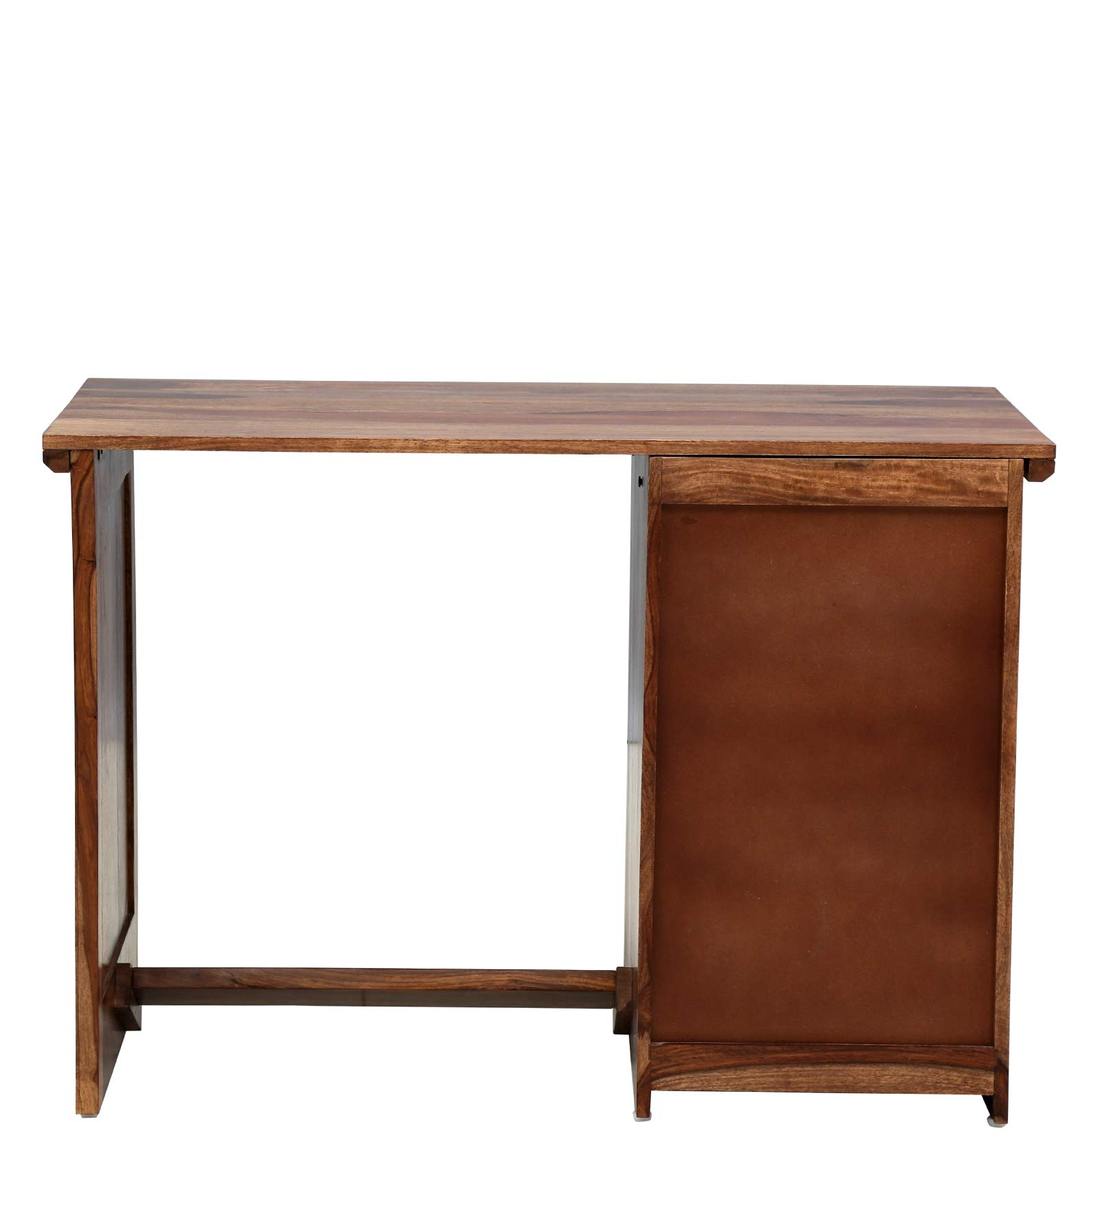 Niware Solid Wood Study Table with Storage For Study Room in Teak Finish - Rajwada Furnish